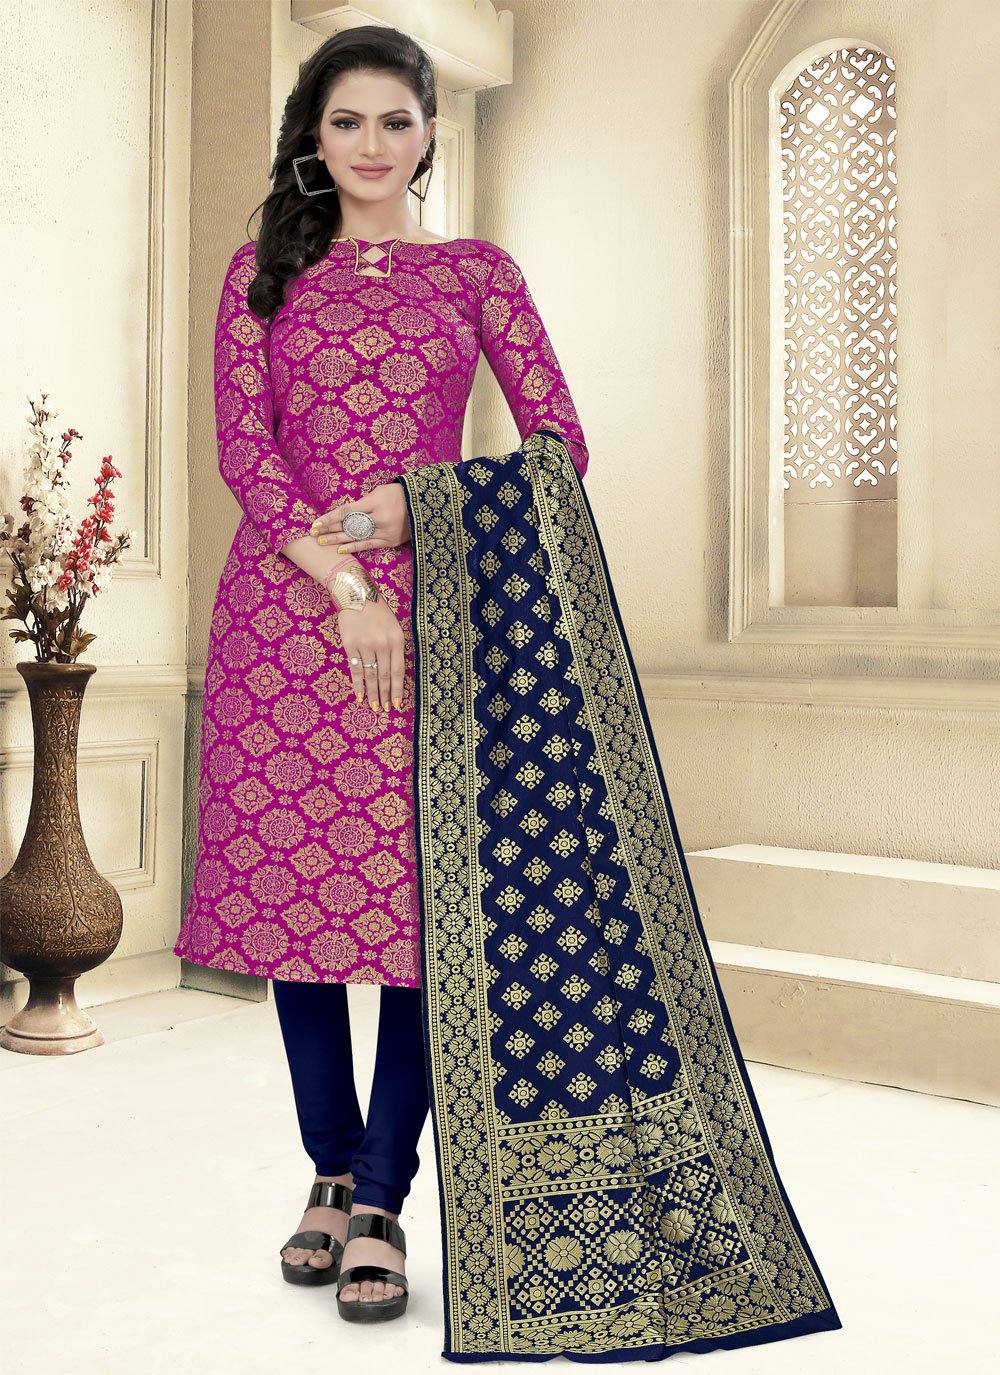 Baby pink Colour Combination For Dresses||Colour Contrast For  Kurtis/Dresses/Suits||Punjabi Suit - YouTube